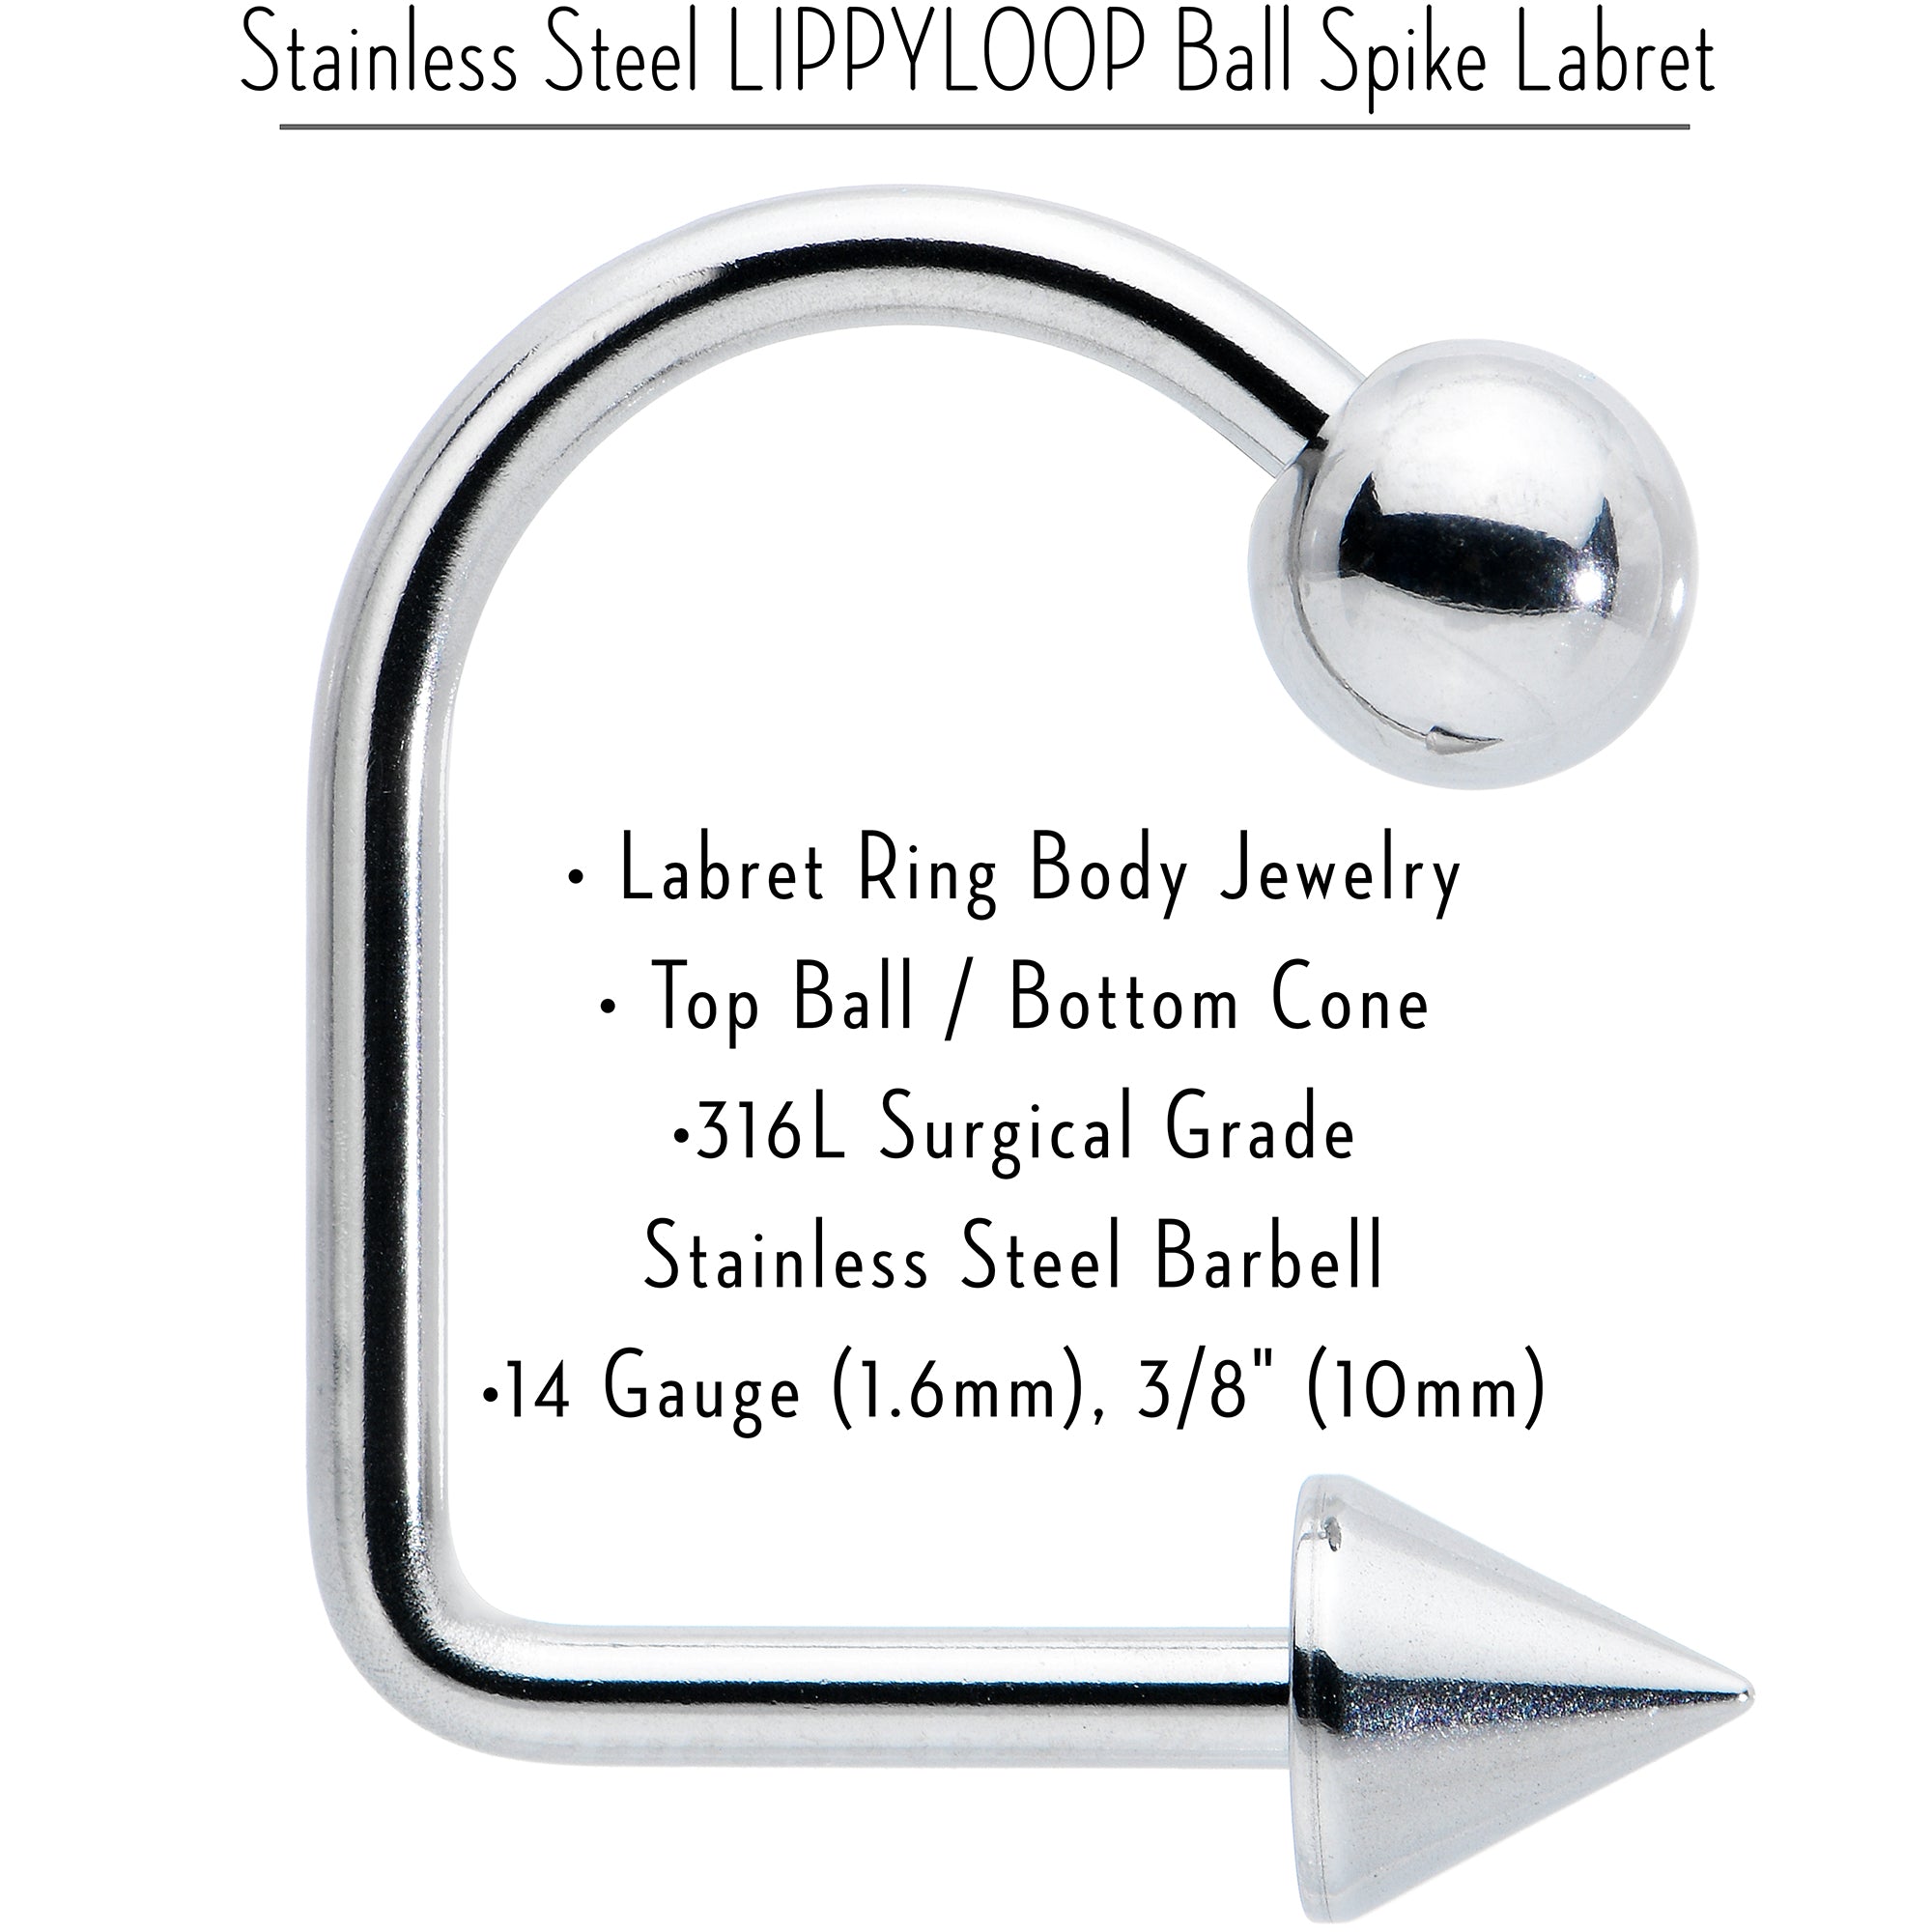 14 Gauge Stainless Steel LIPPYLOOP Ball Spike Labret